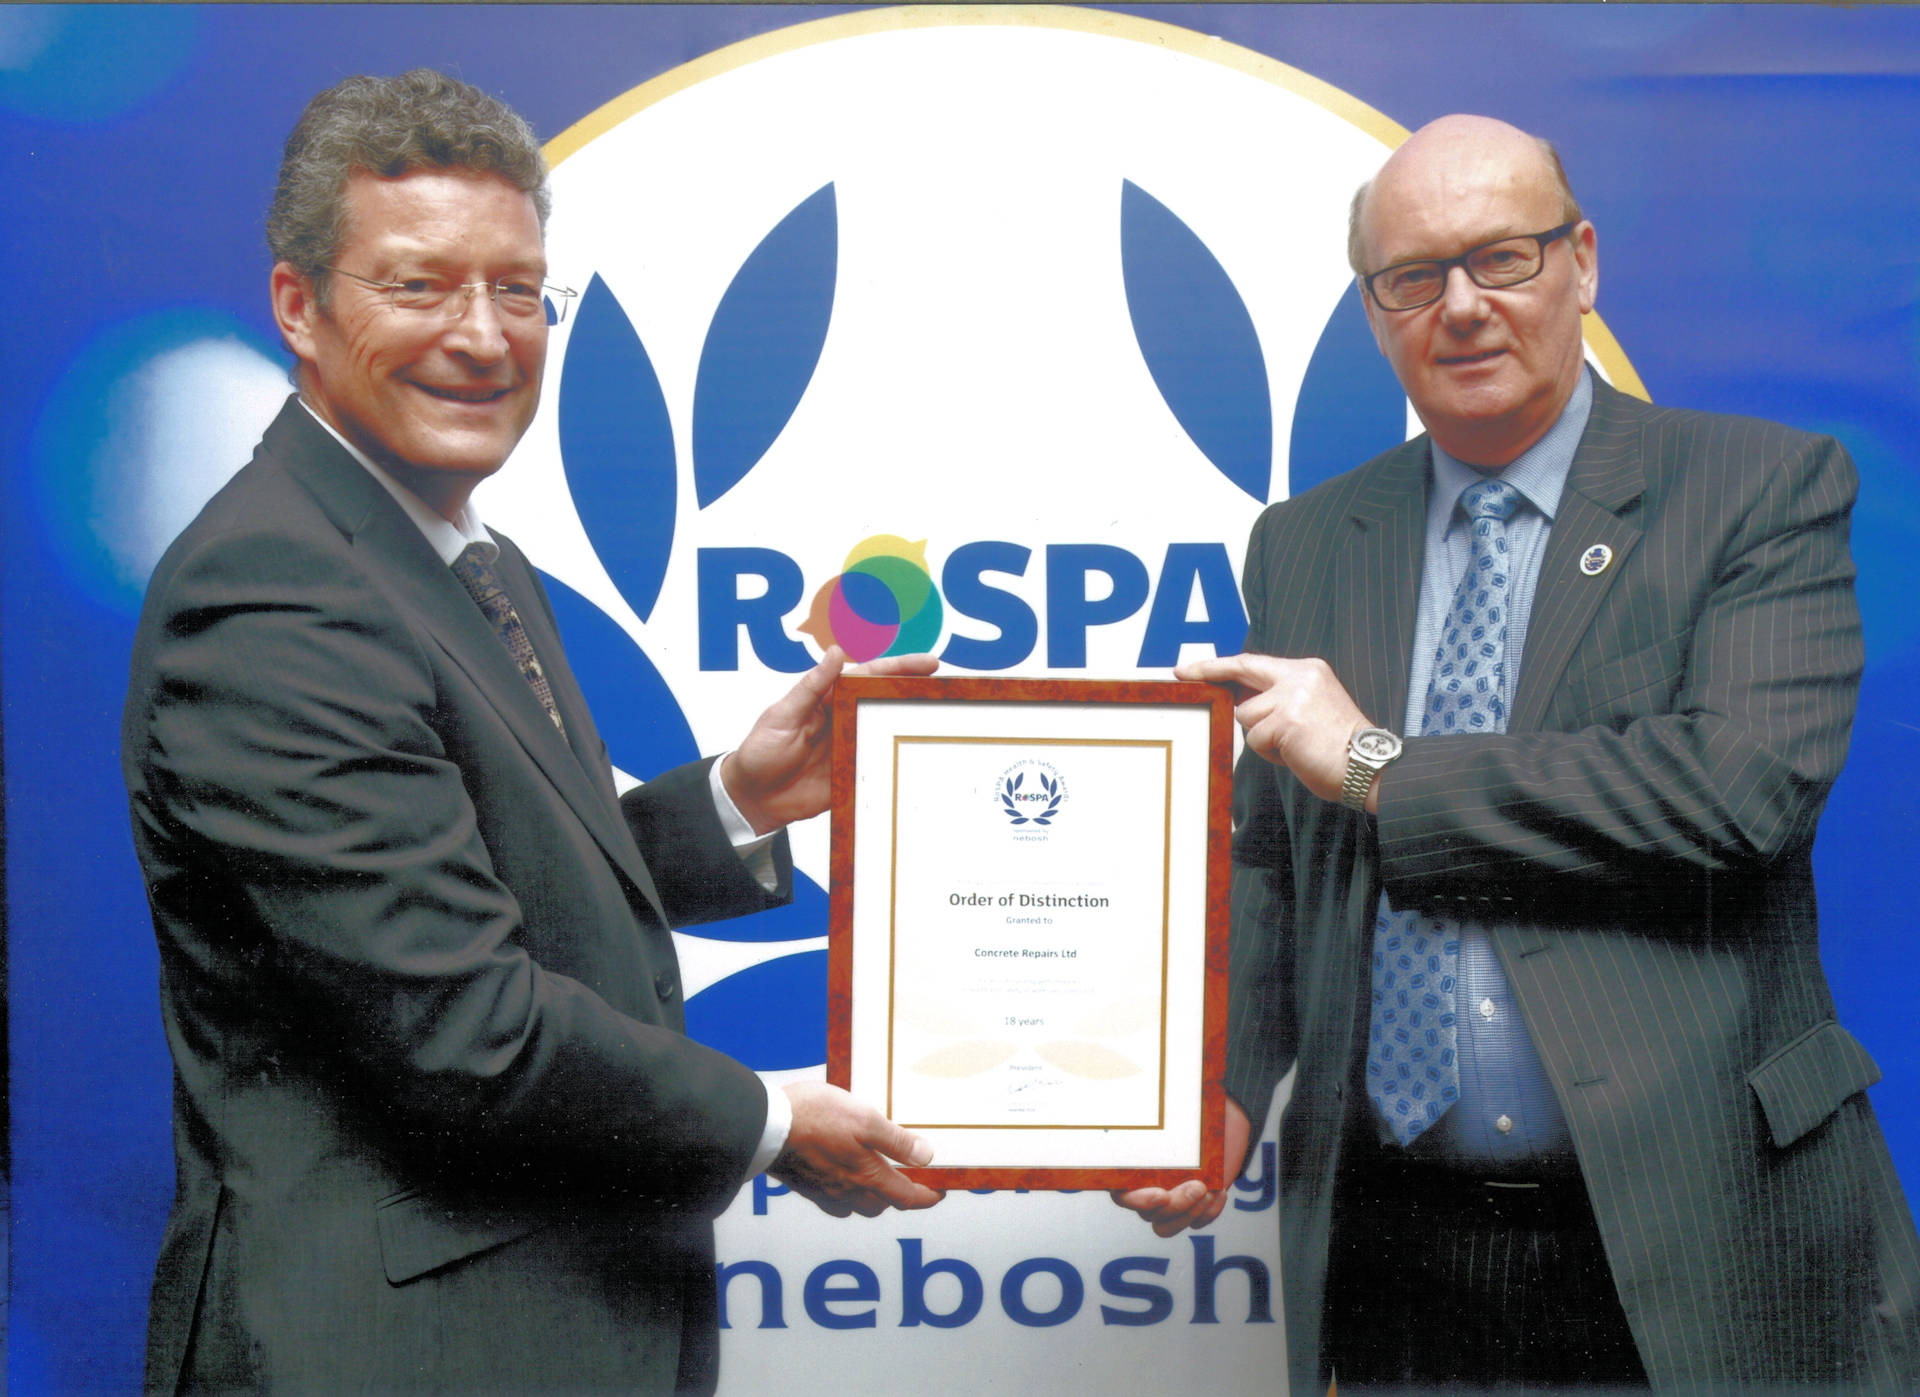 RoSPA Certificate of Distinction